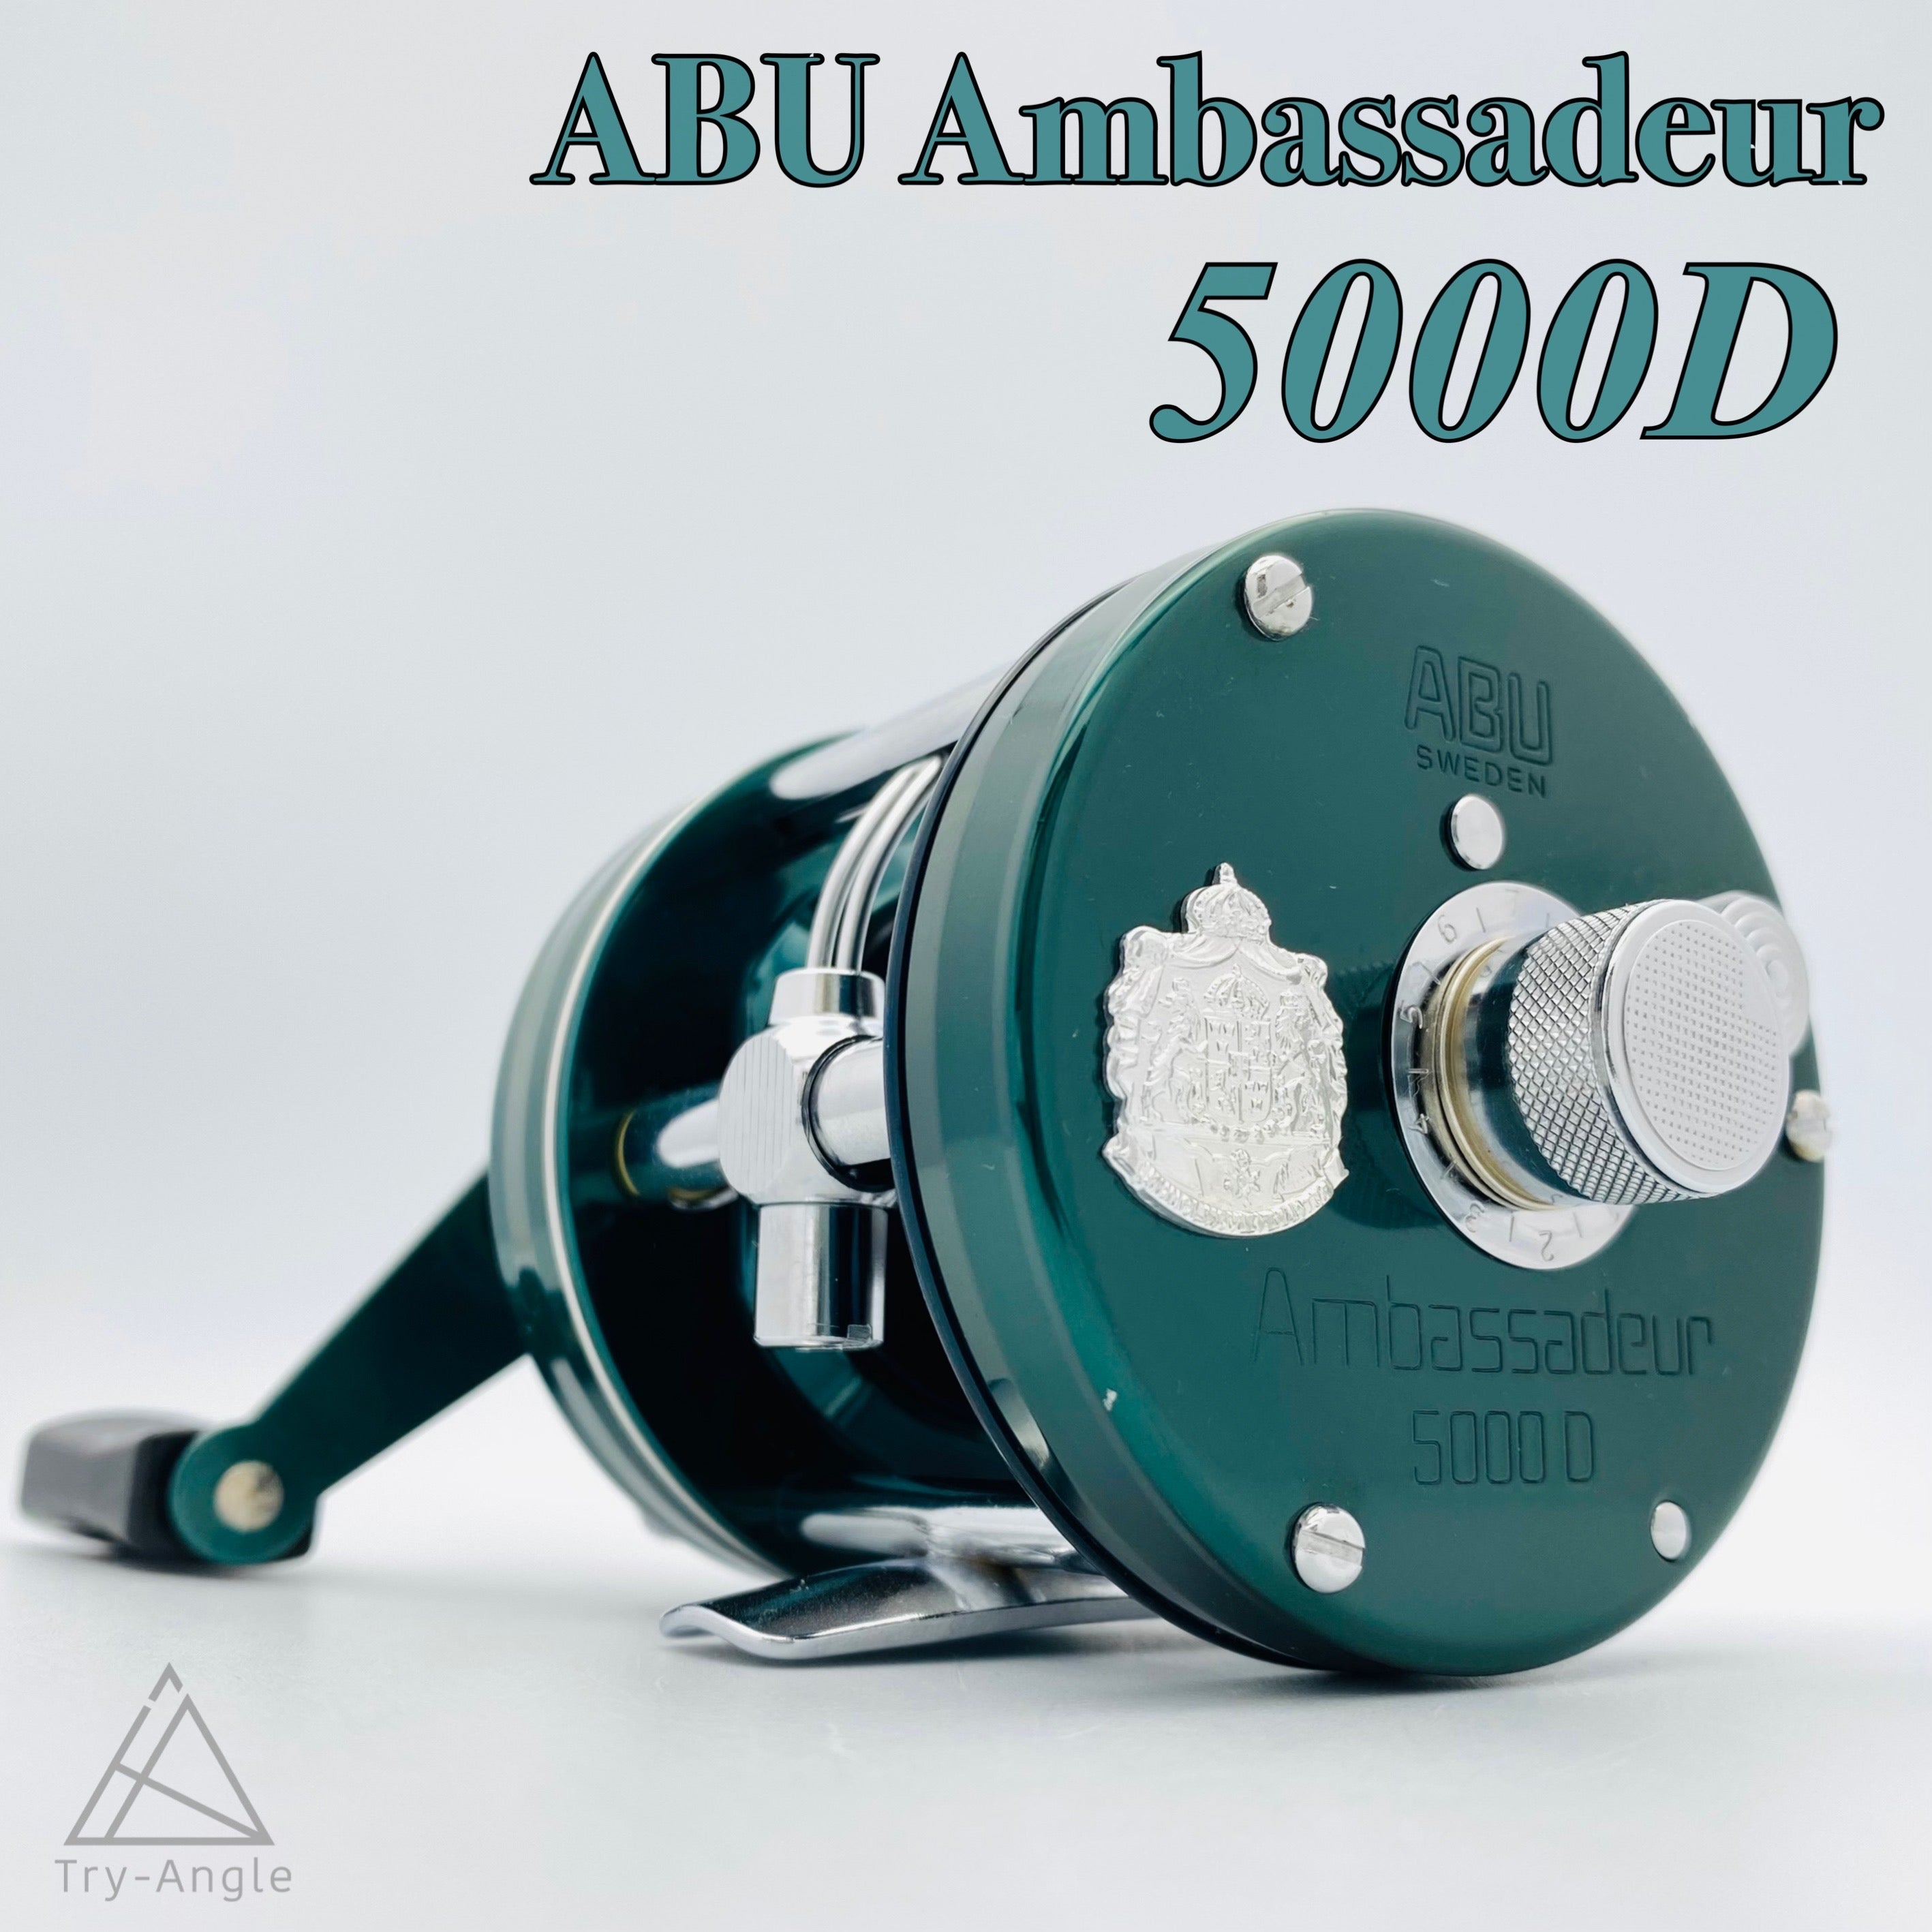 Abu Ambassadeur 5000D green 760903